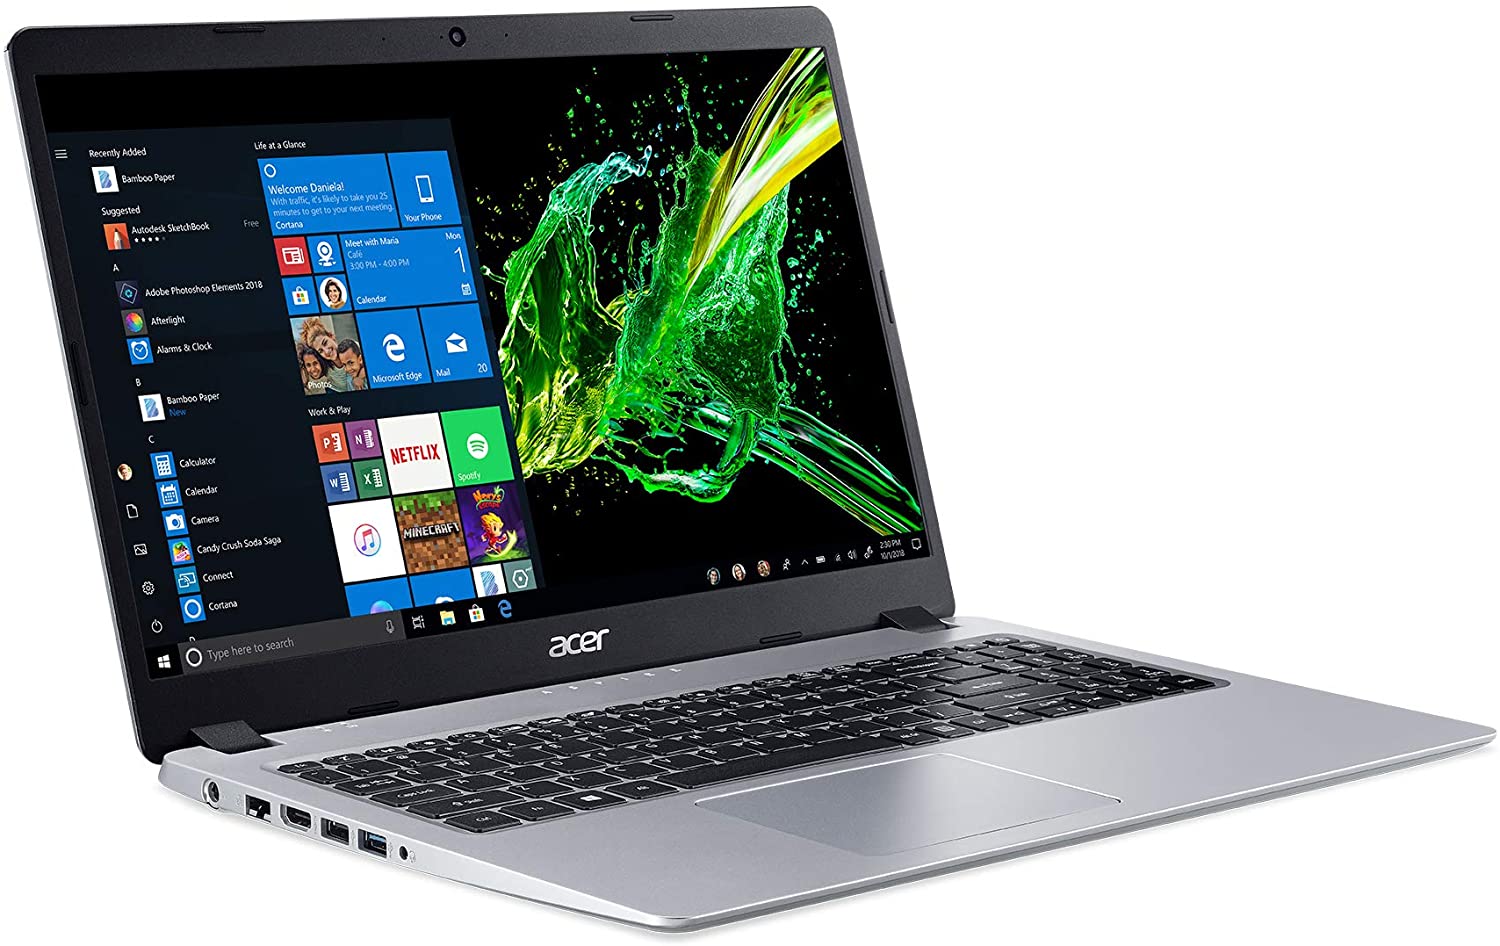 1. Acer Aspire 5 Slim Laptop